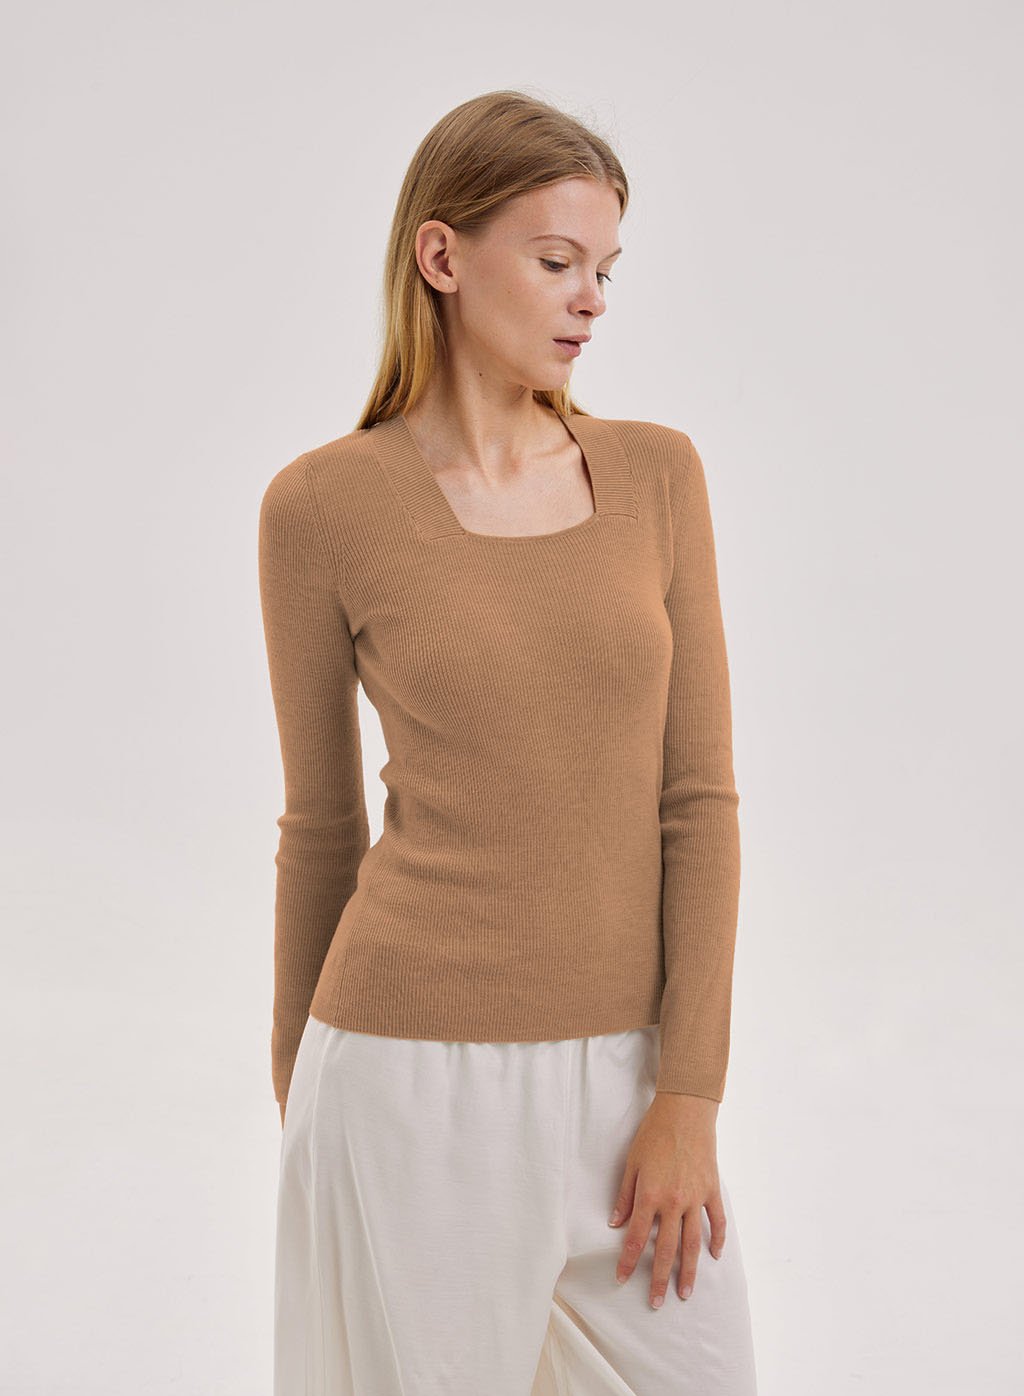 Nap Loungewear - scoop camel hair knit top